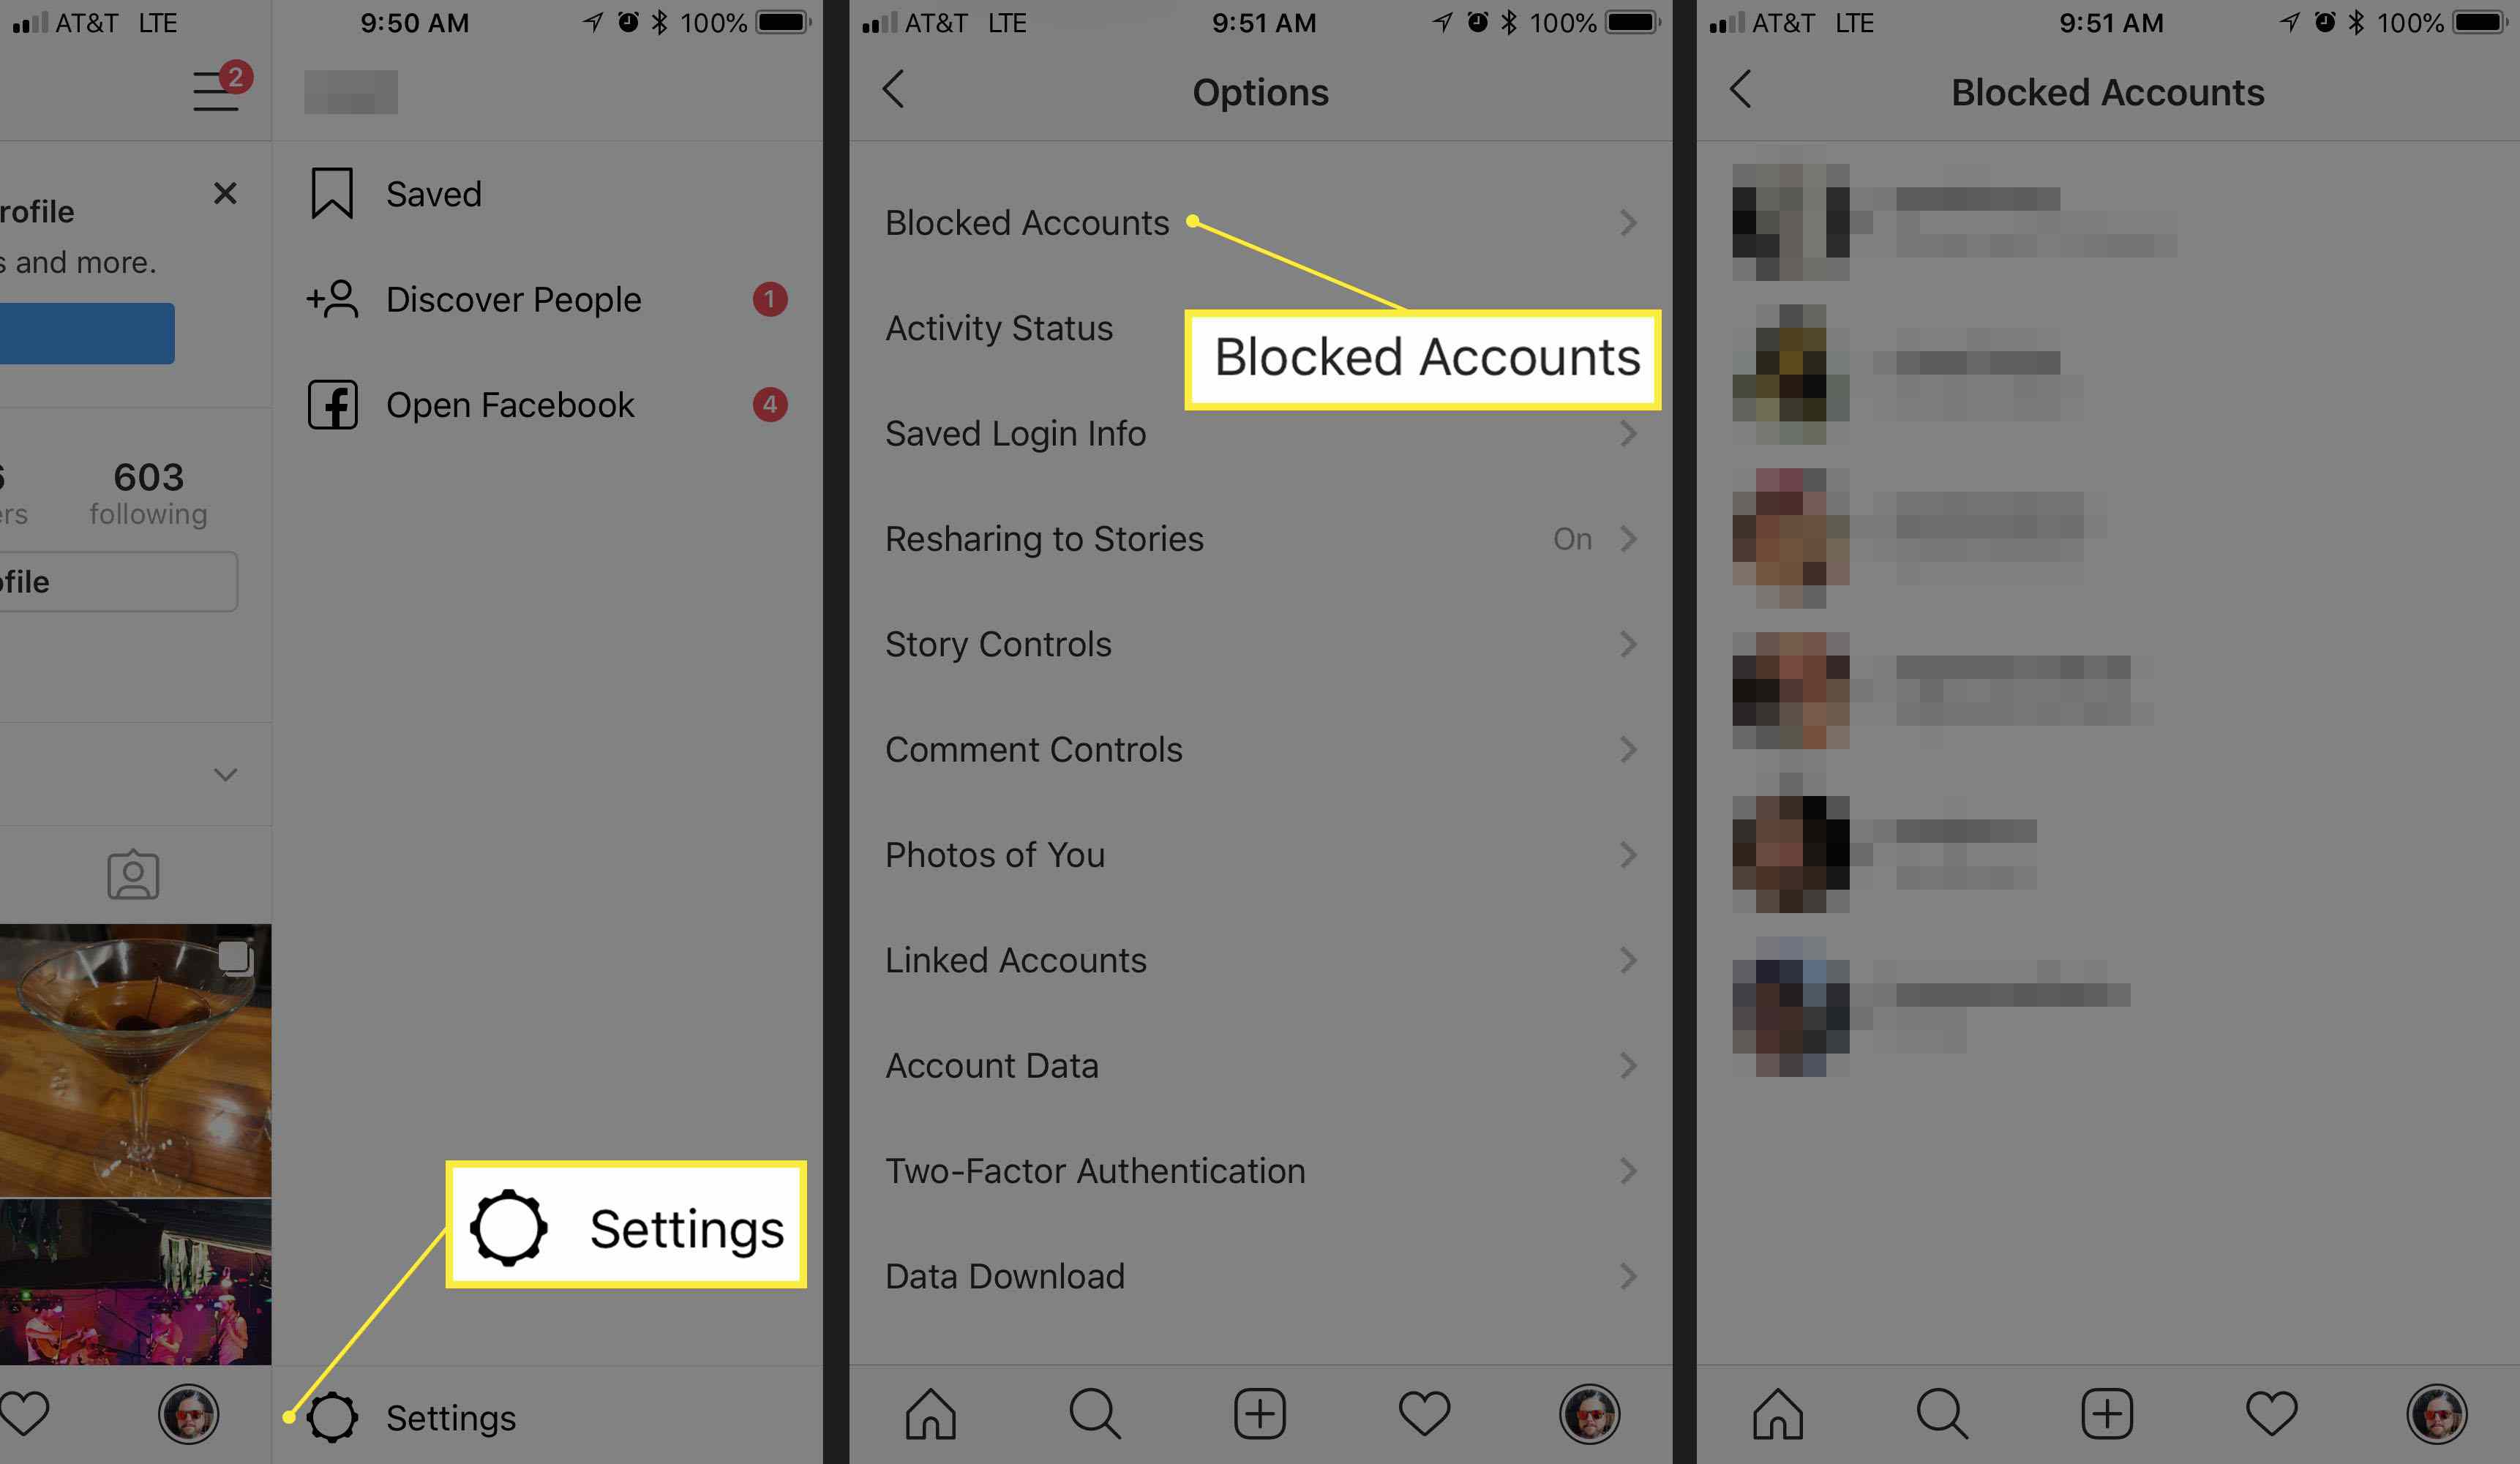 Interface de contas bloqueadas no Instagram para iOS